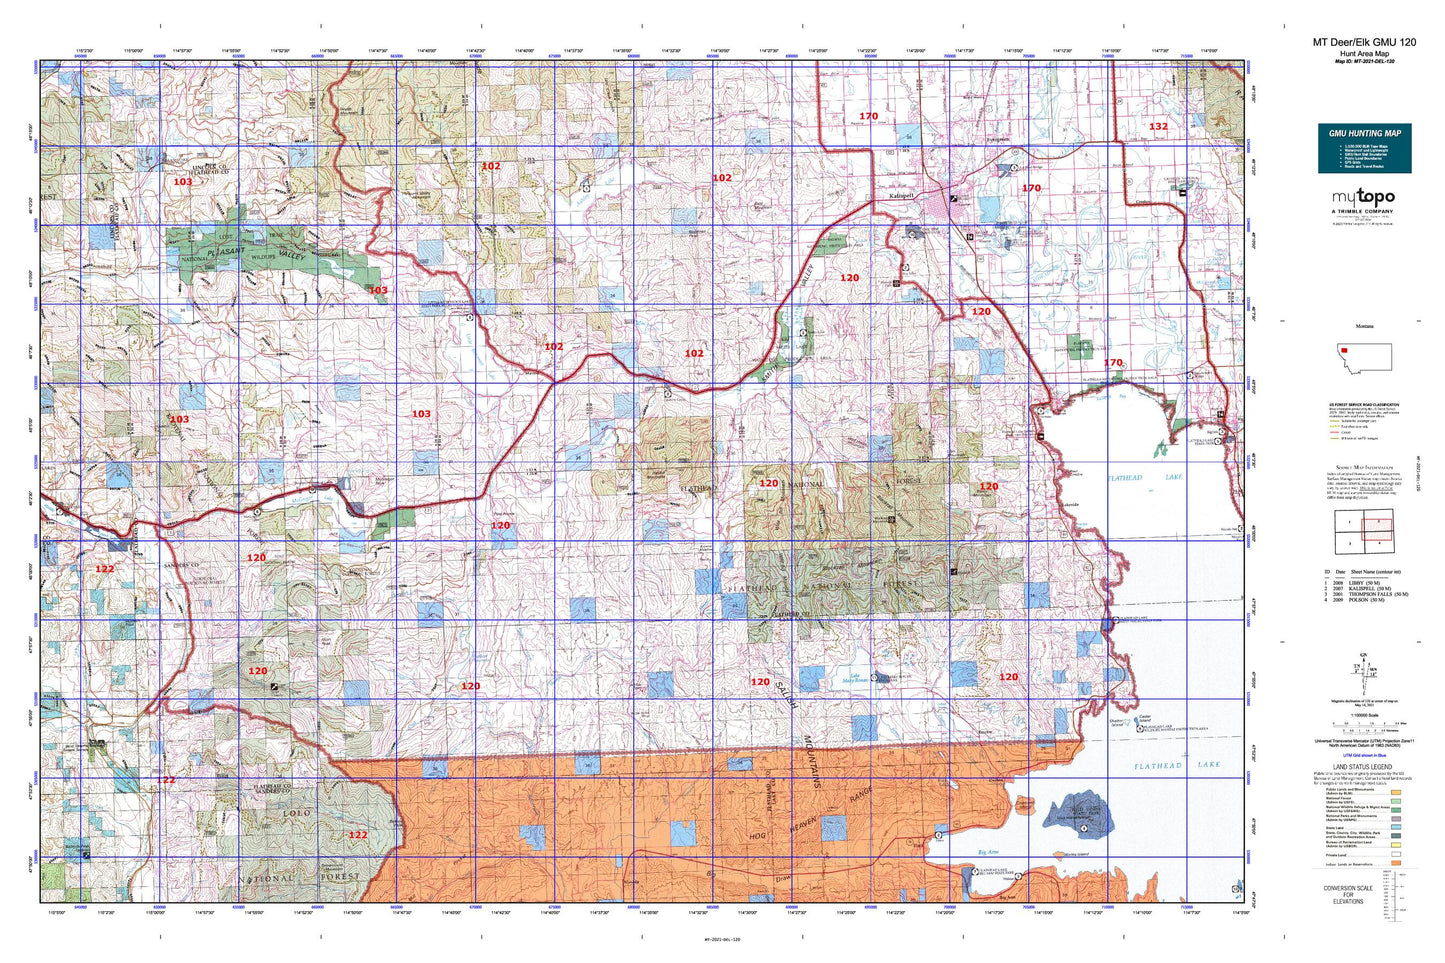 Montana Deer/Elk GMU 120 Map Image